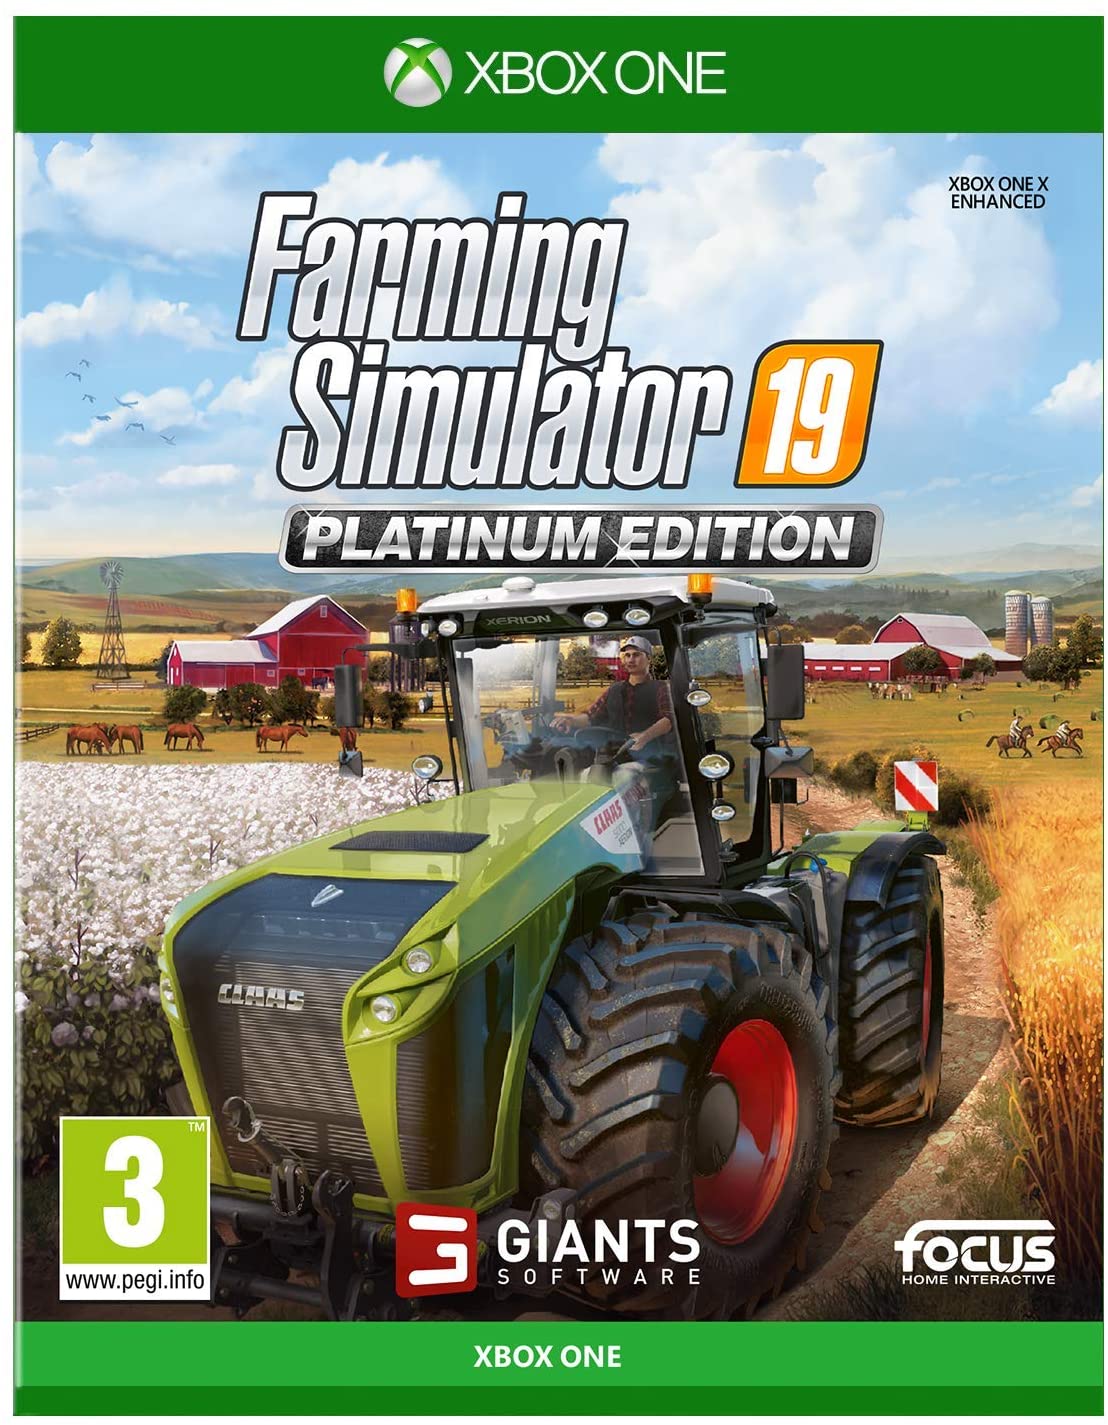 buy-farming-simulator-19-platinum-edition-digital-download-key-xbox-one-series-x-usa-with